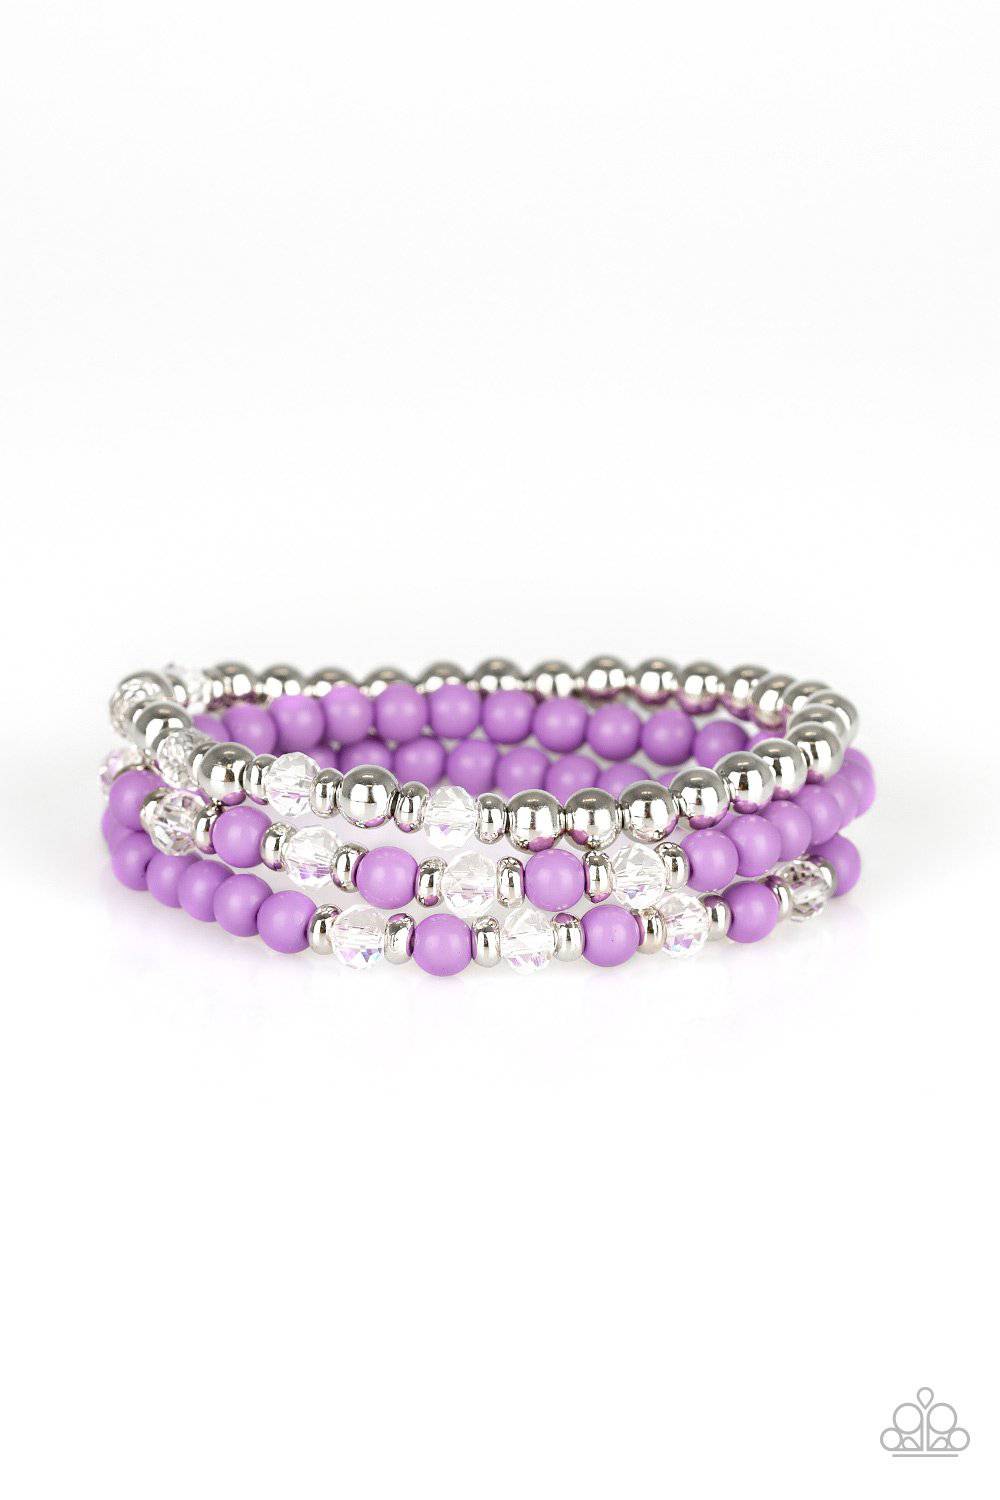 Irresistibly Irresistible - Purple Stretchy Bracelets - Paparazzi Accessories - GlaMarous Titi Jewels